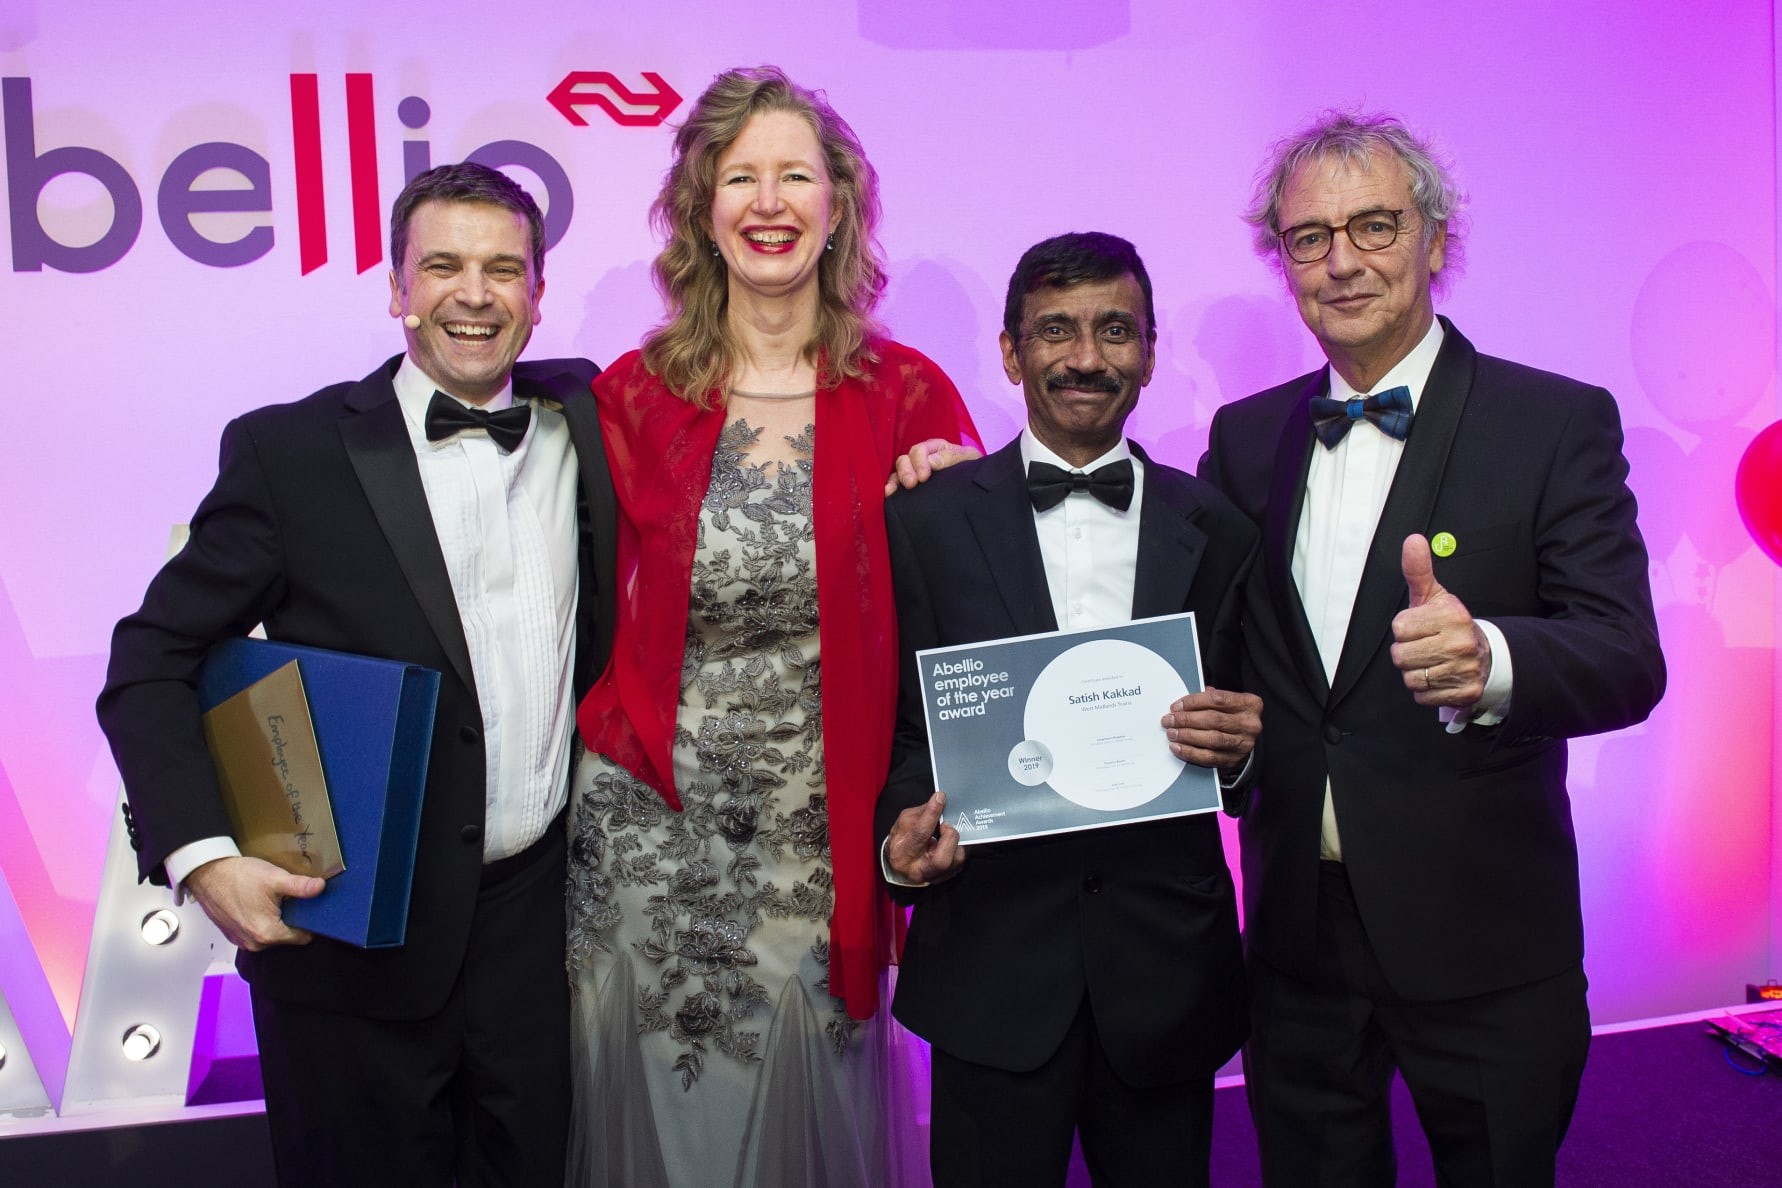 Milton Keynes booking office clerk wins prestigious 'Employee of the Year' award 